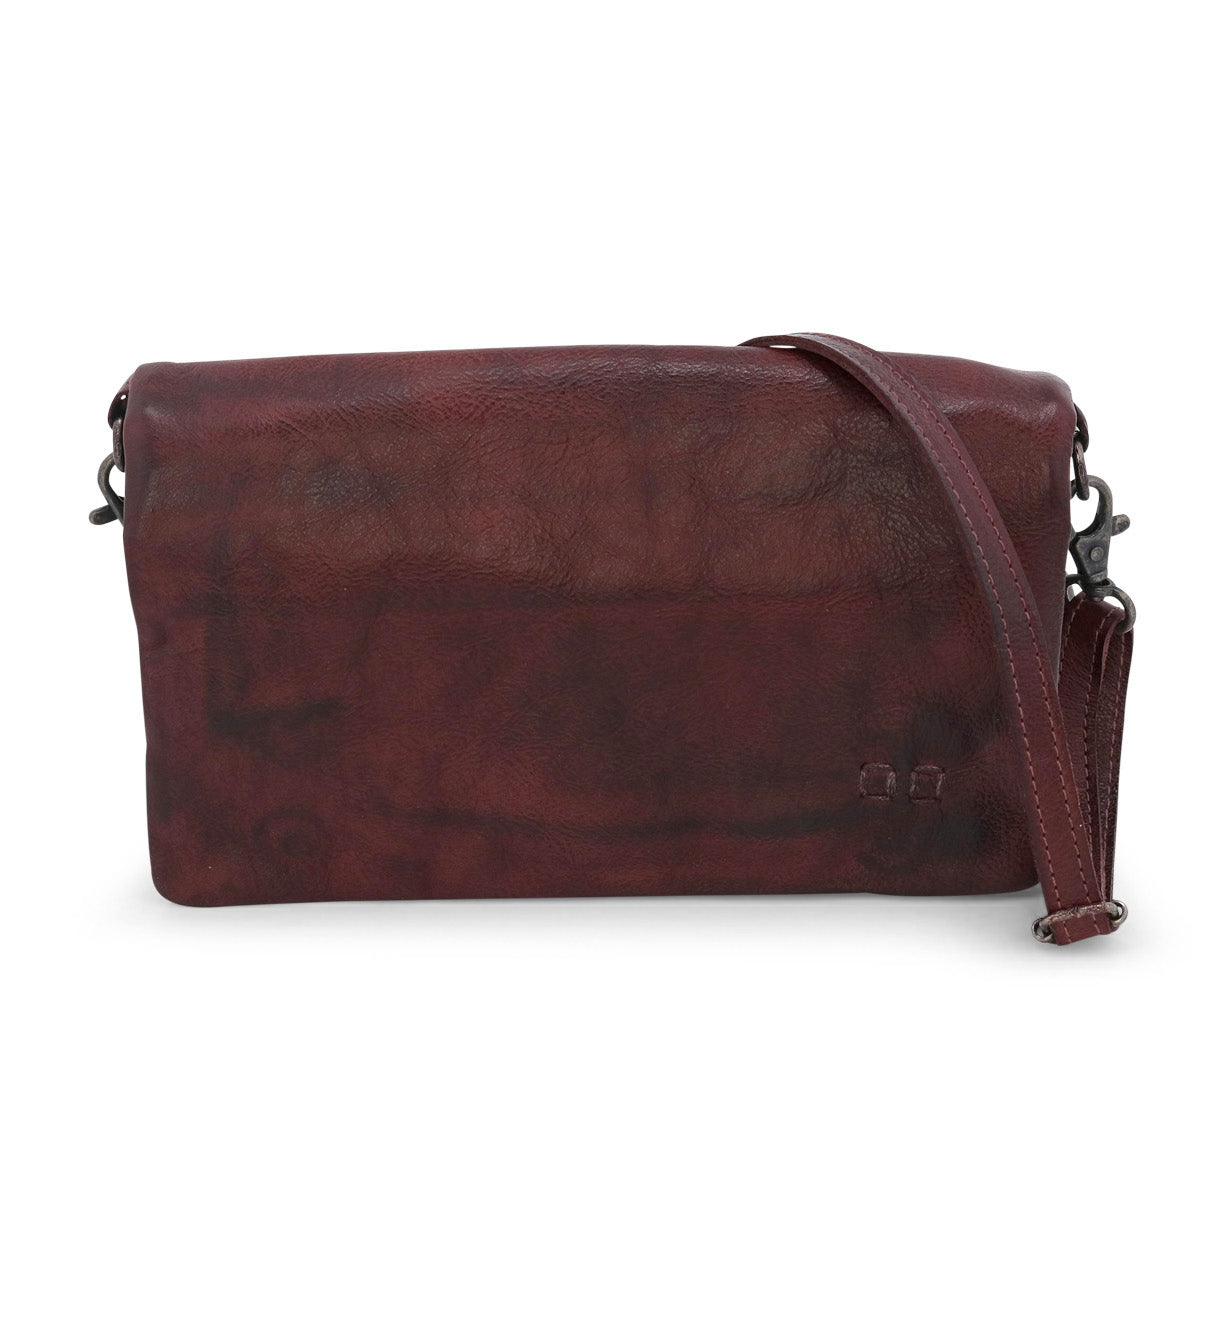 The Bed Stu Cadence burgundy leather crossbody bag.